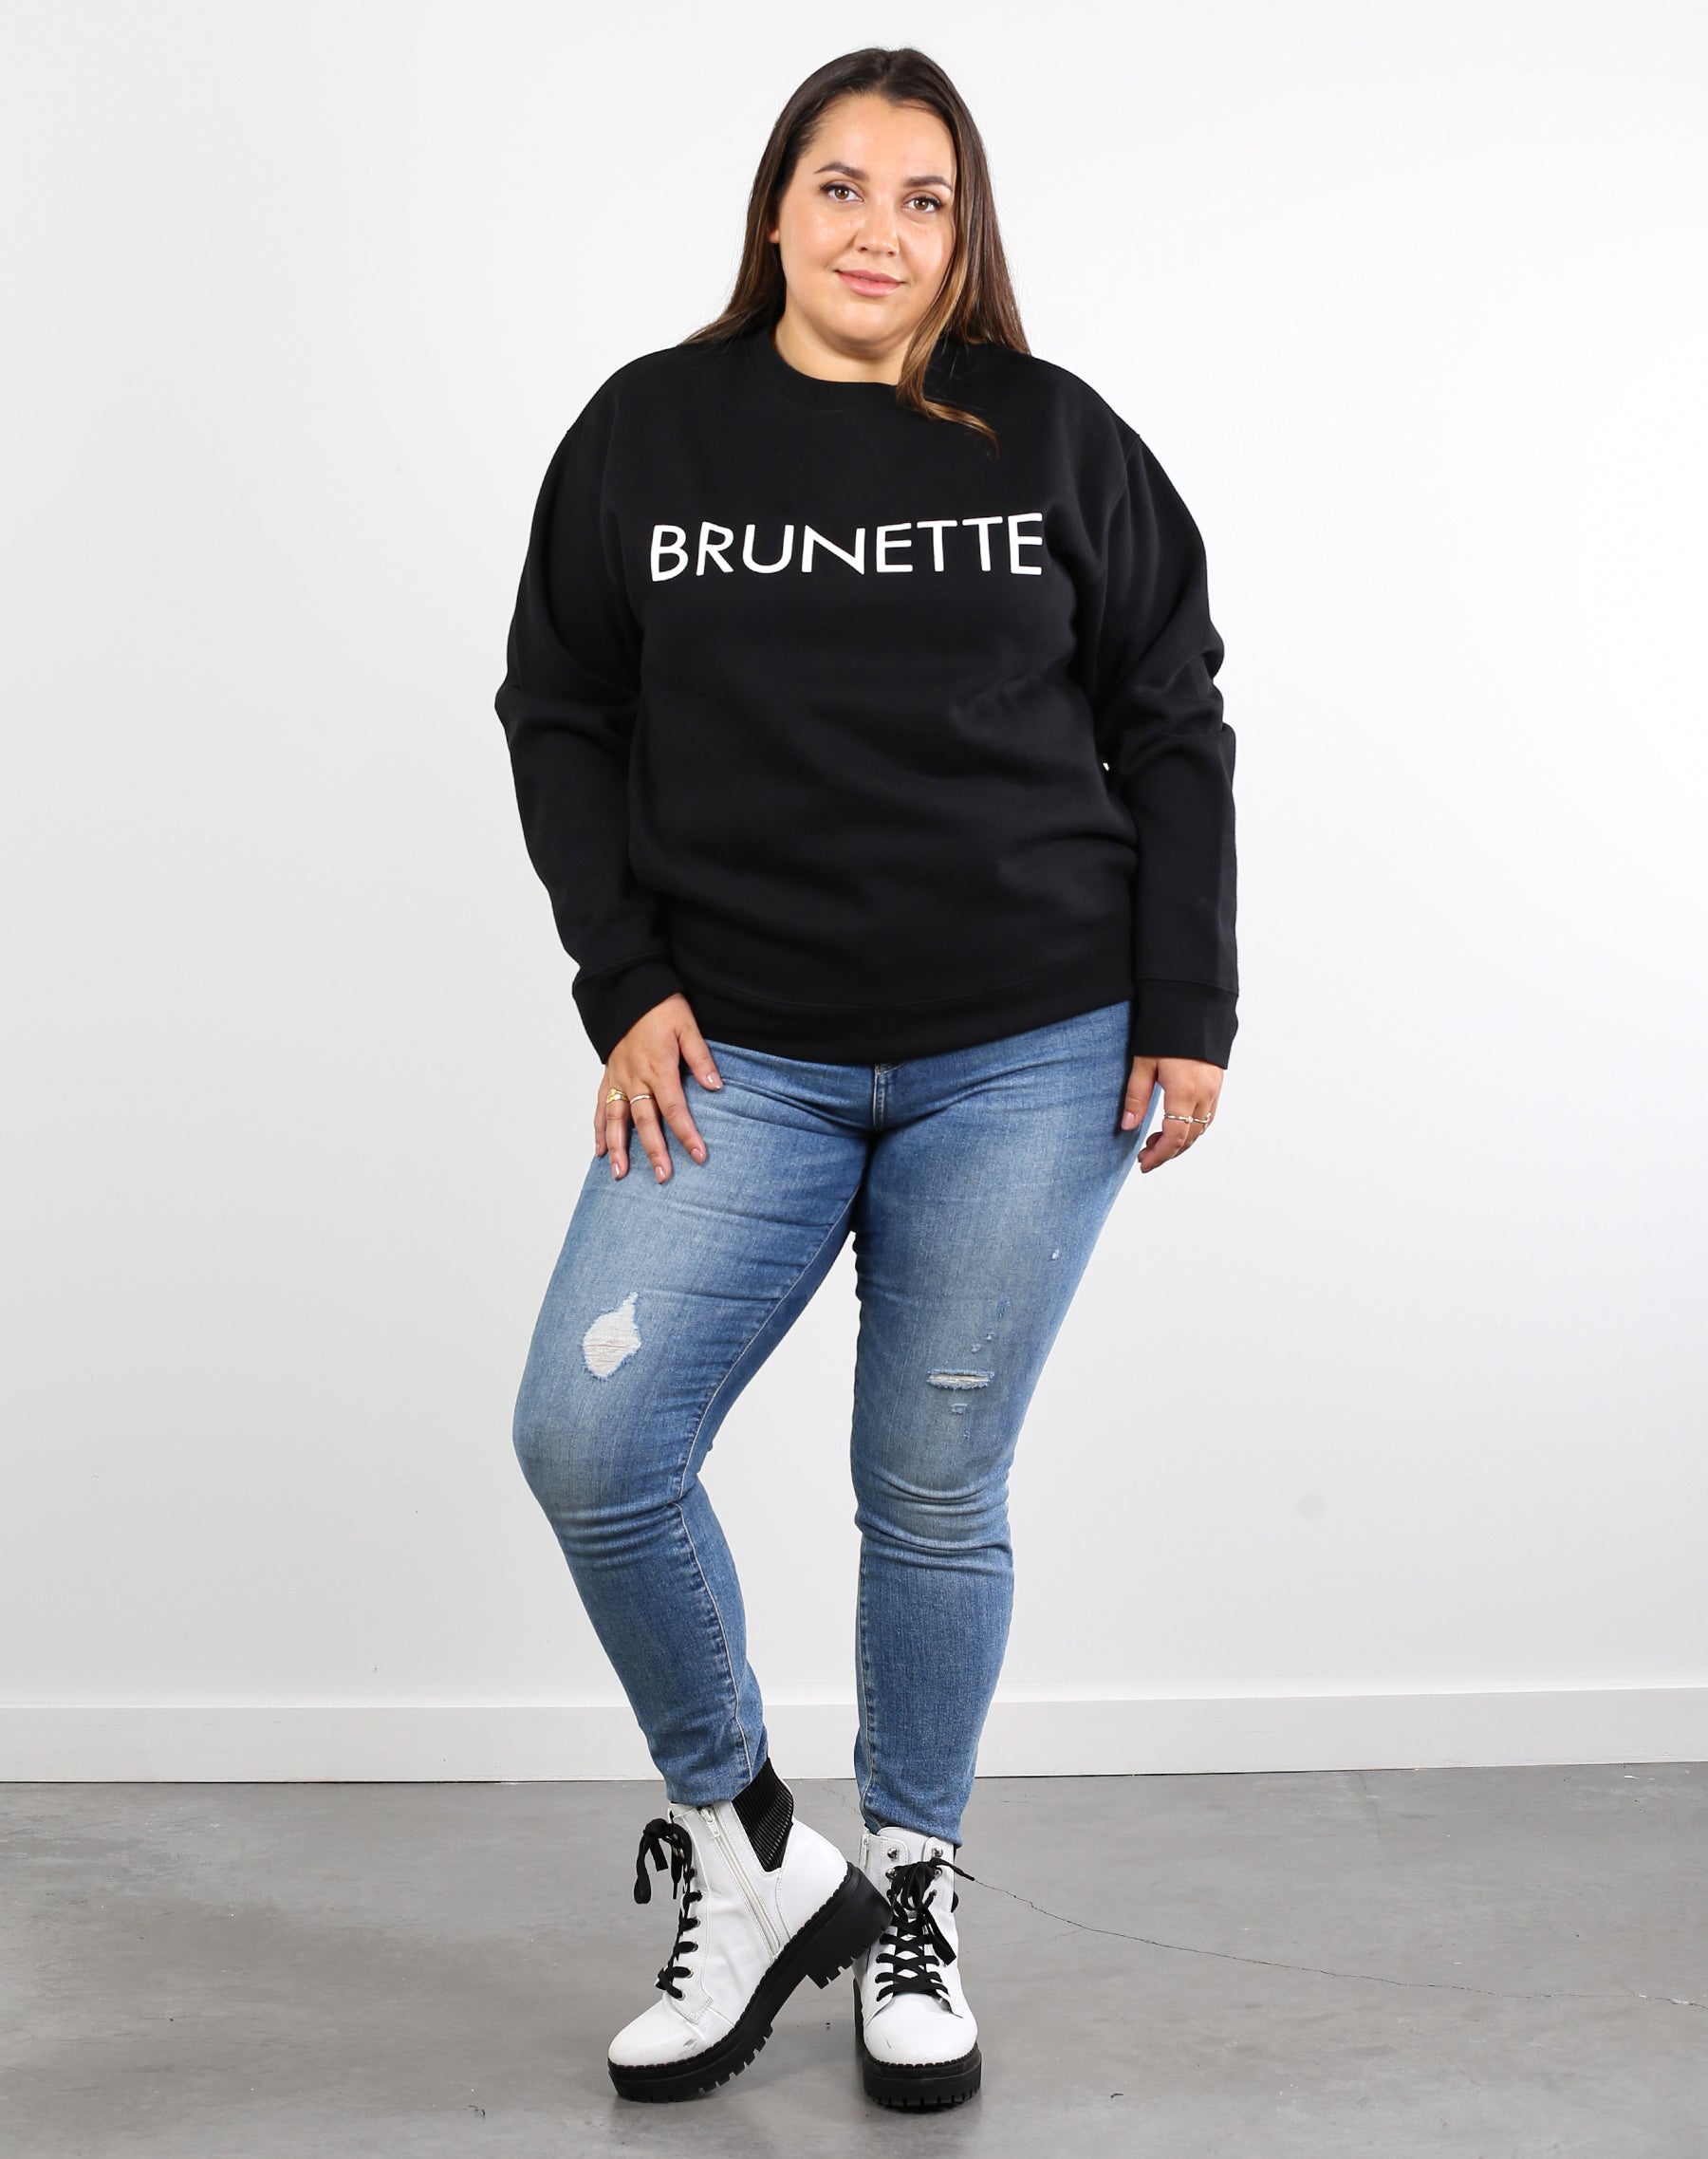 The "BRUNETTE" Classic Crew Neck Sweatshirt | Black